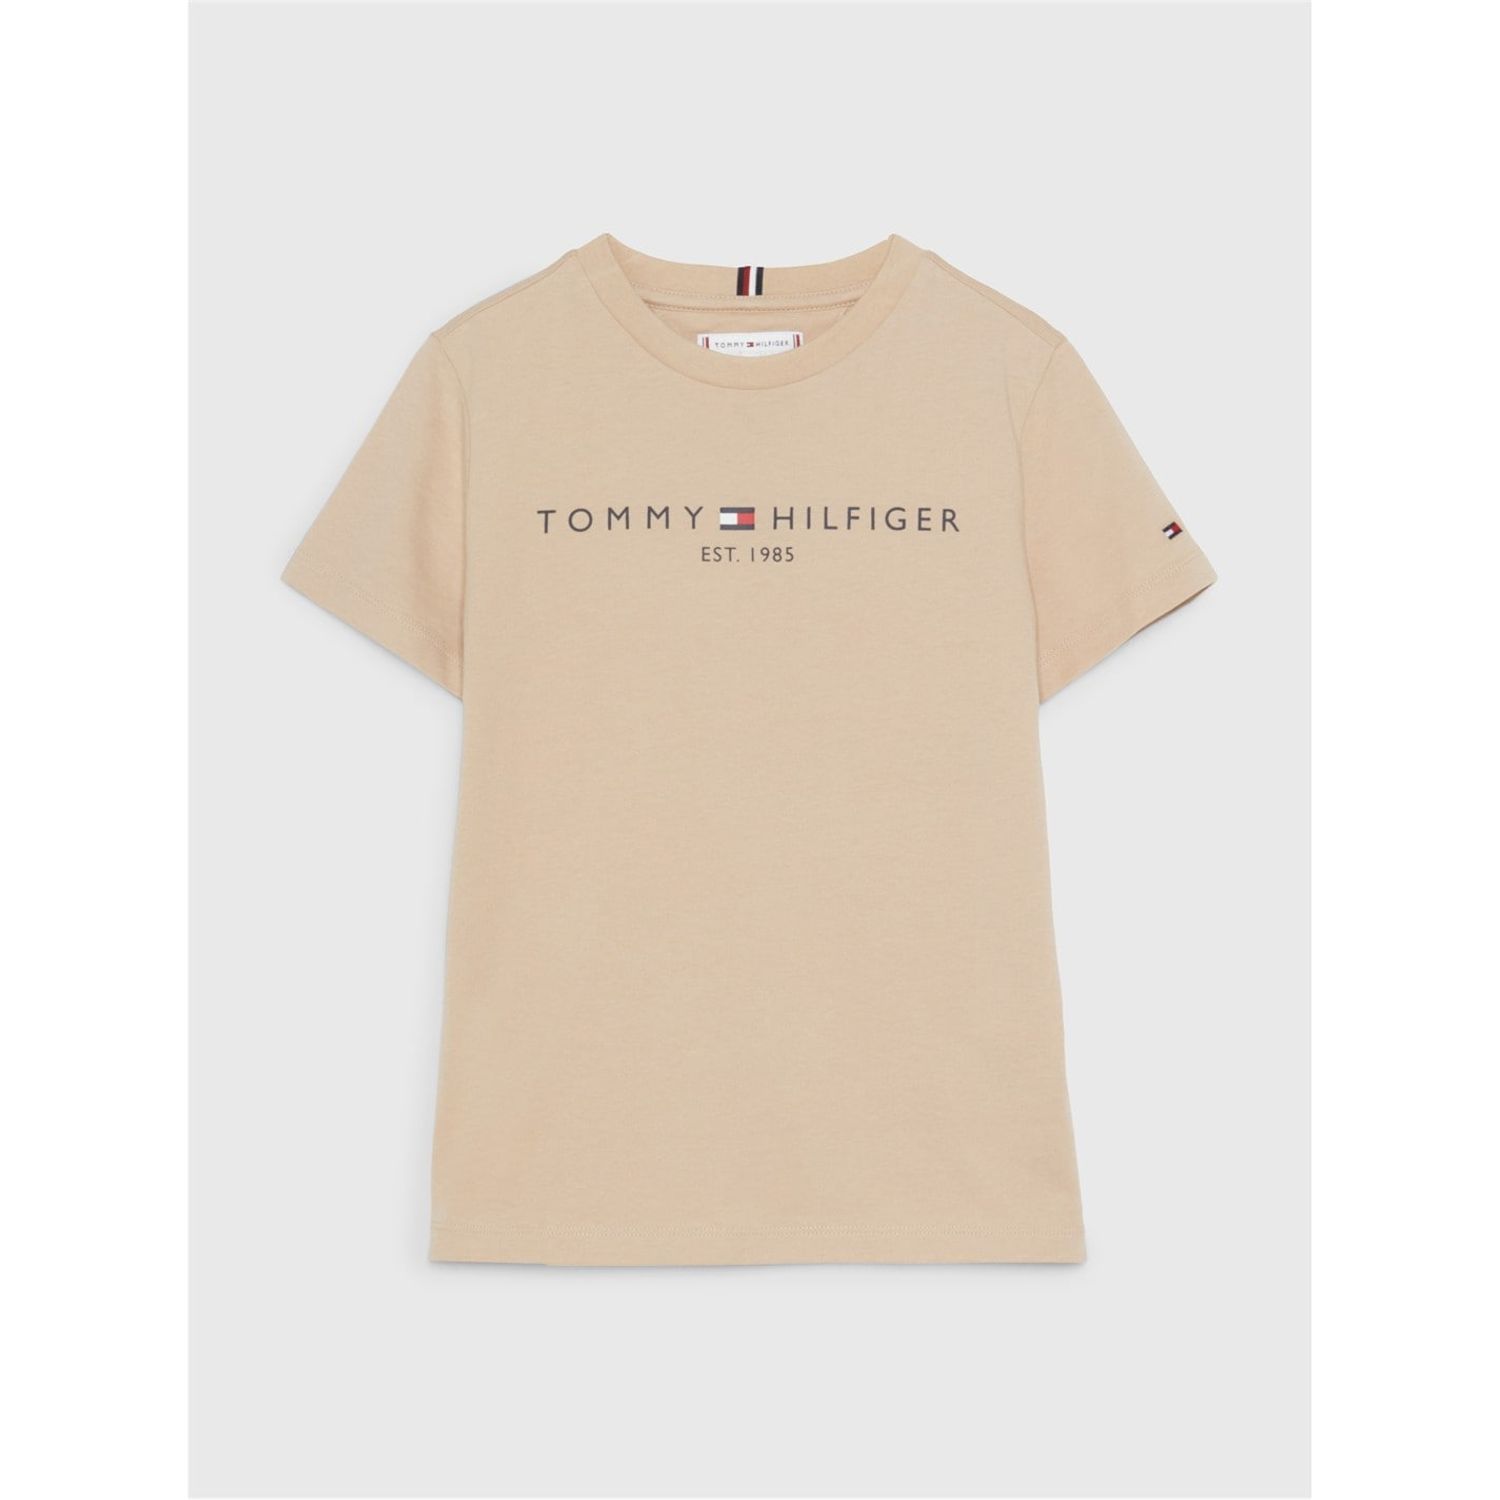 The - Hilfiger Tommy Label T-Shirt Boys Beige Essential Get